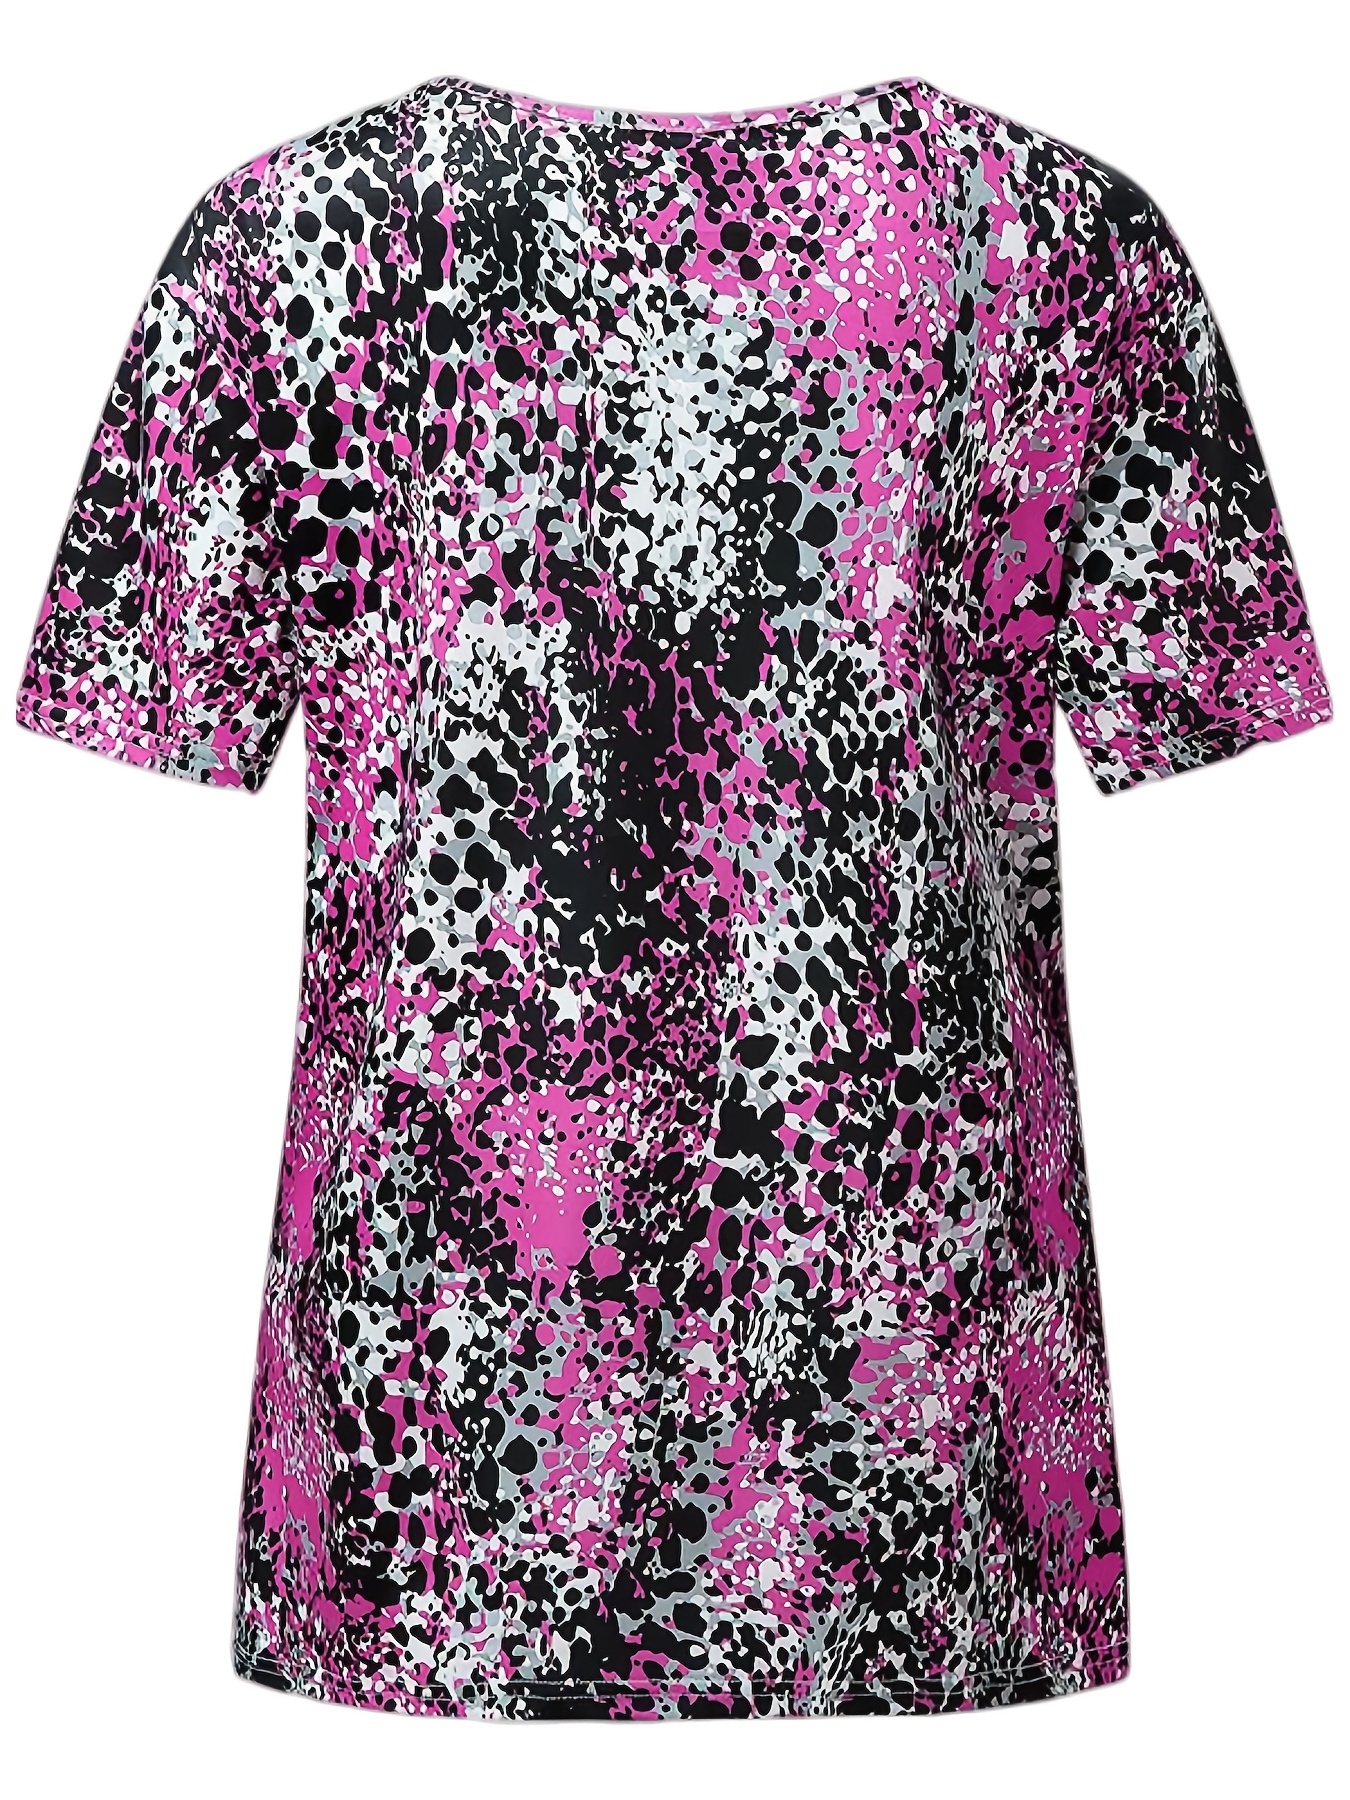 LuLaRoe Womens S Purple/Purple Classic T Animal Print T-Shirt S/s